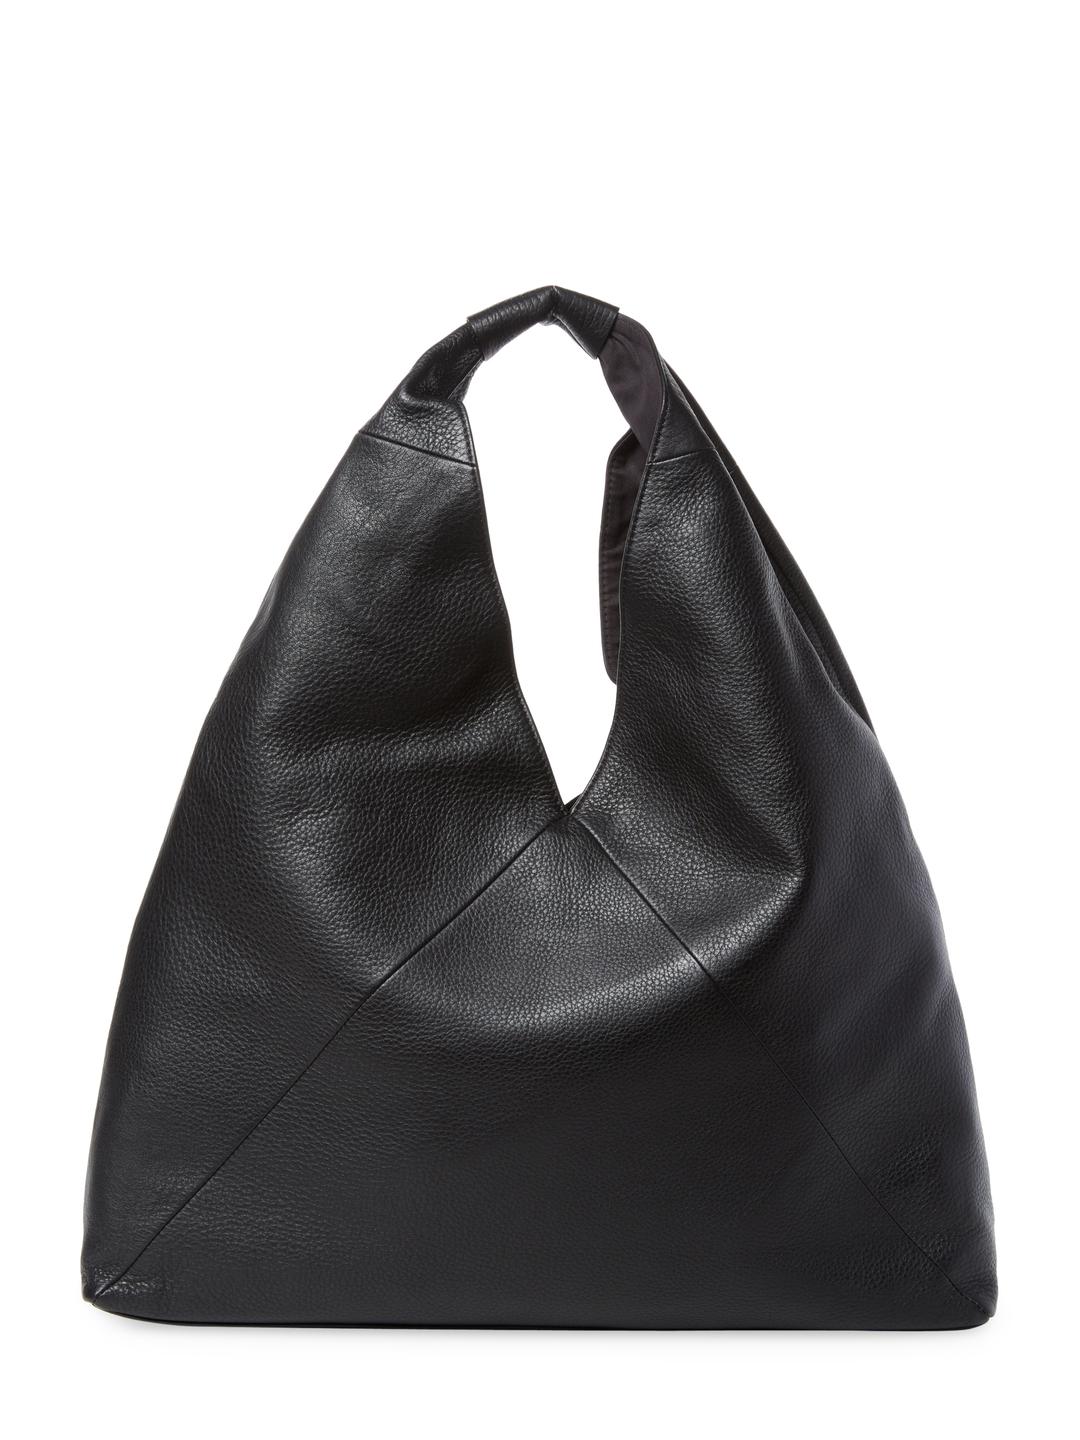 Steven Alan Tristan Triangle Hobo Bag in Black | Lyst